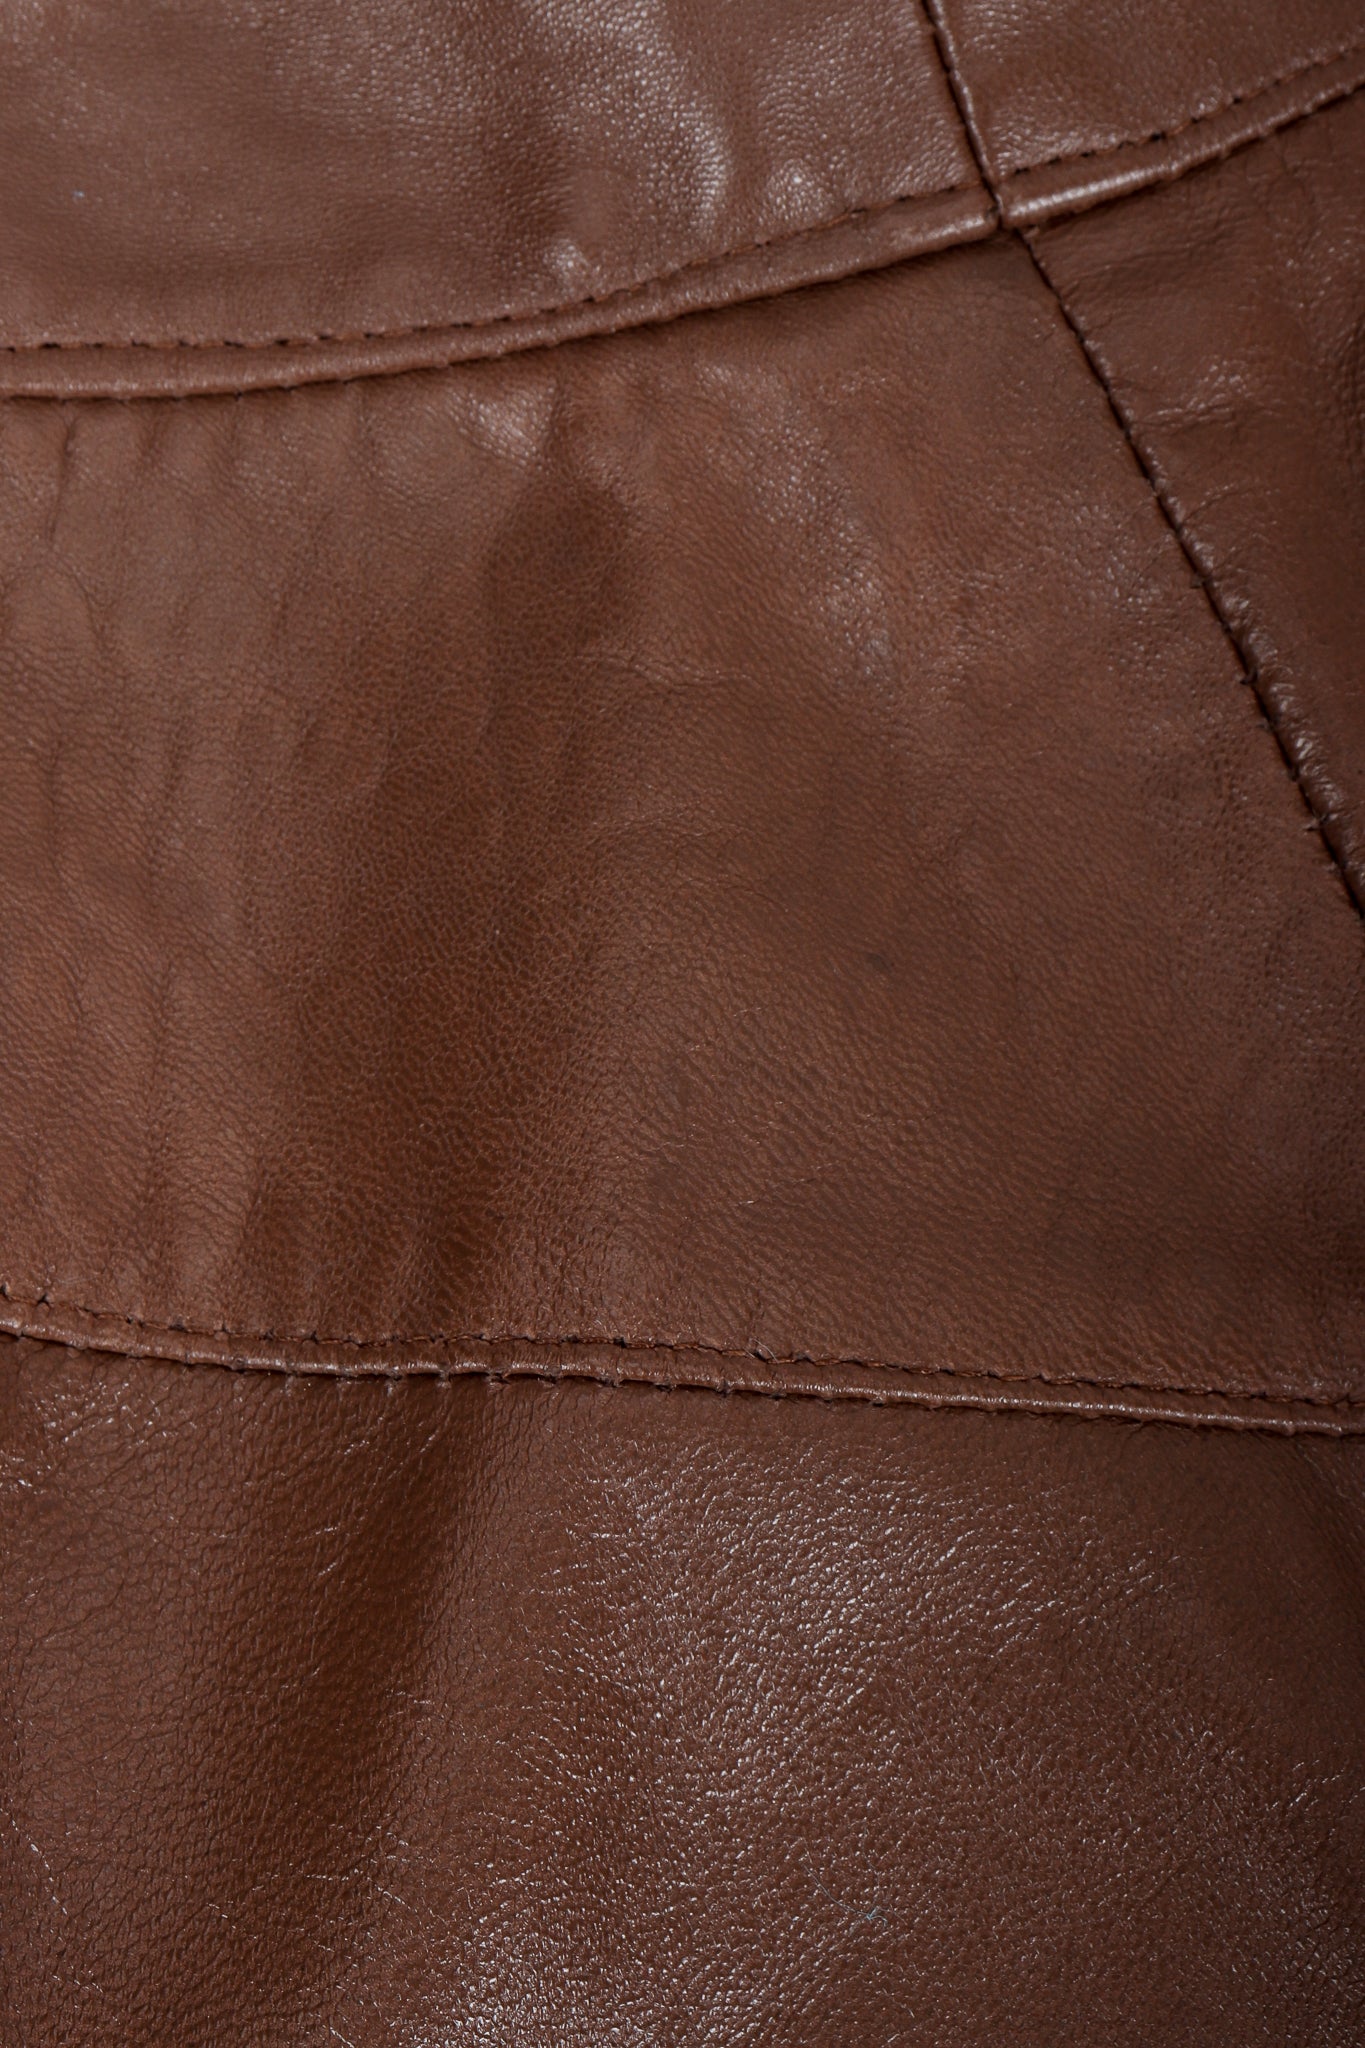 Vintage Firenze Santa Barbara Leather jacket leather texture at sleeves